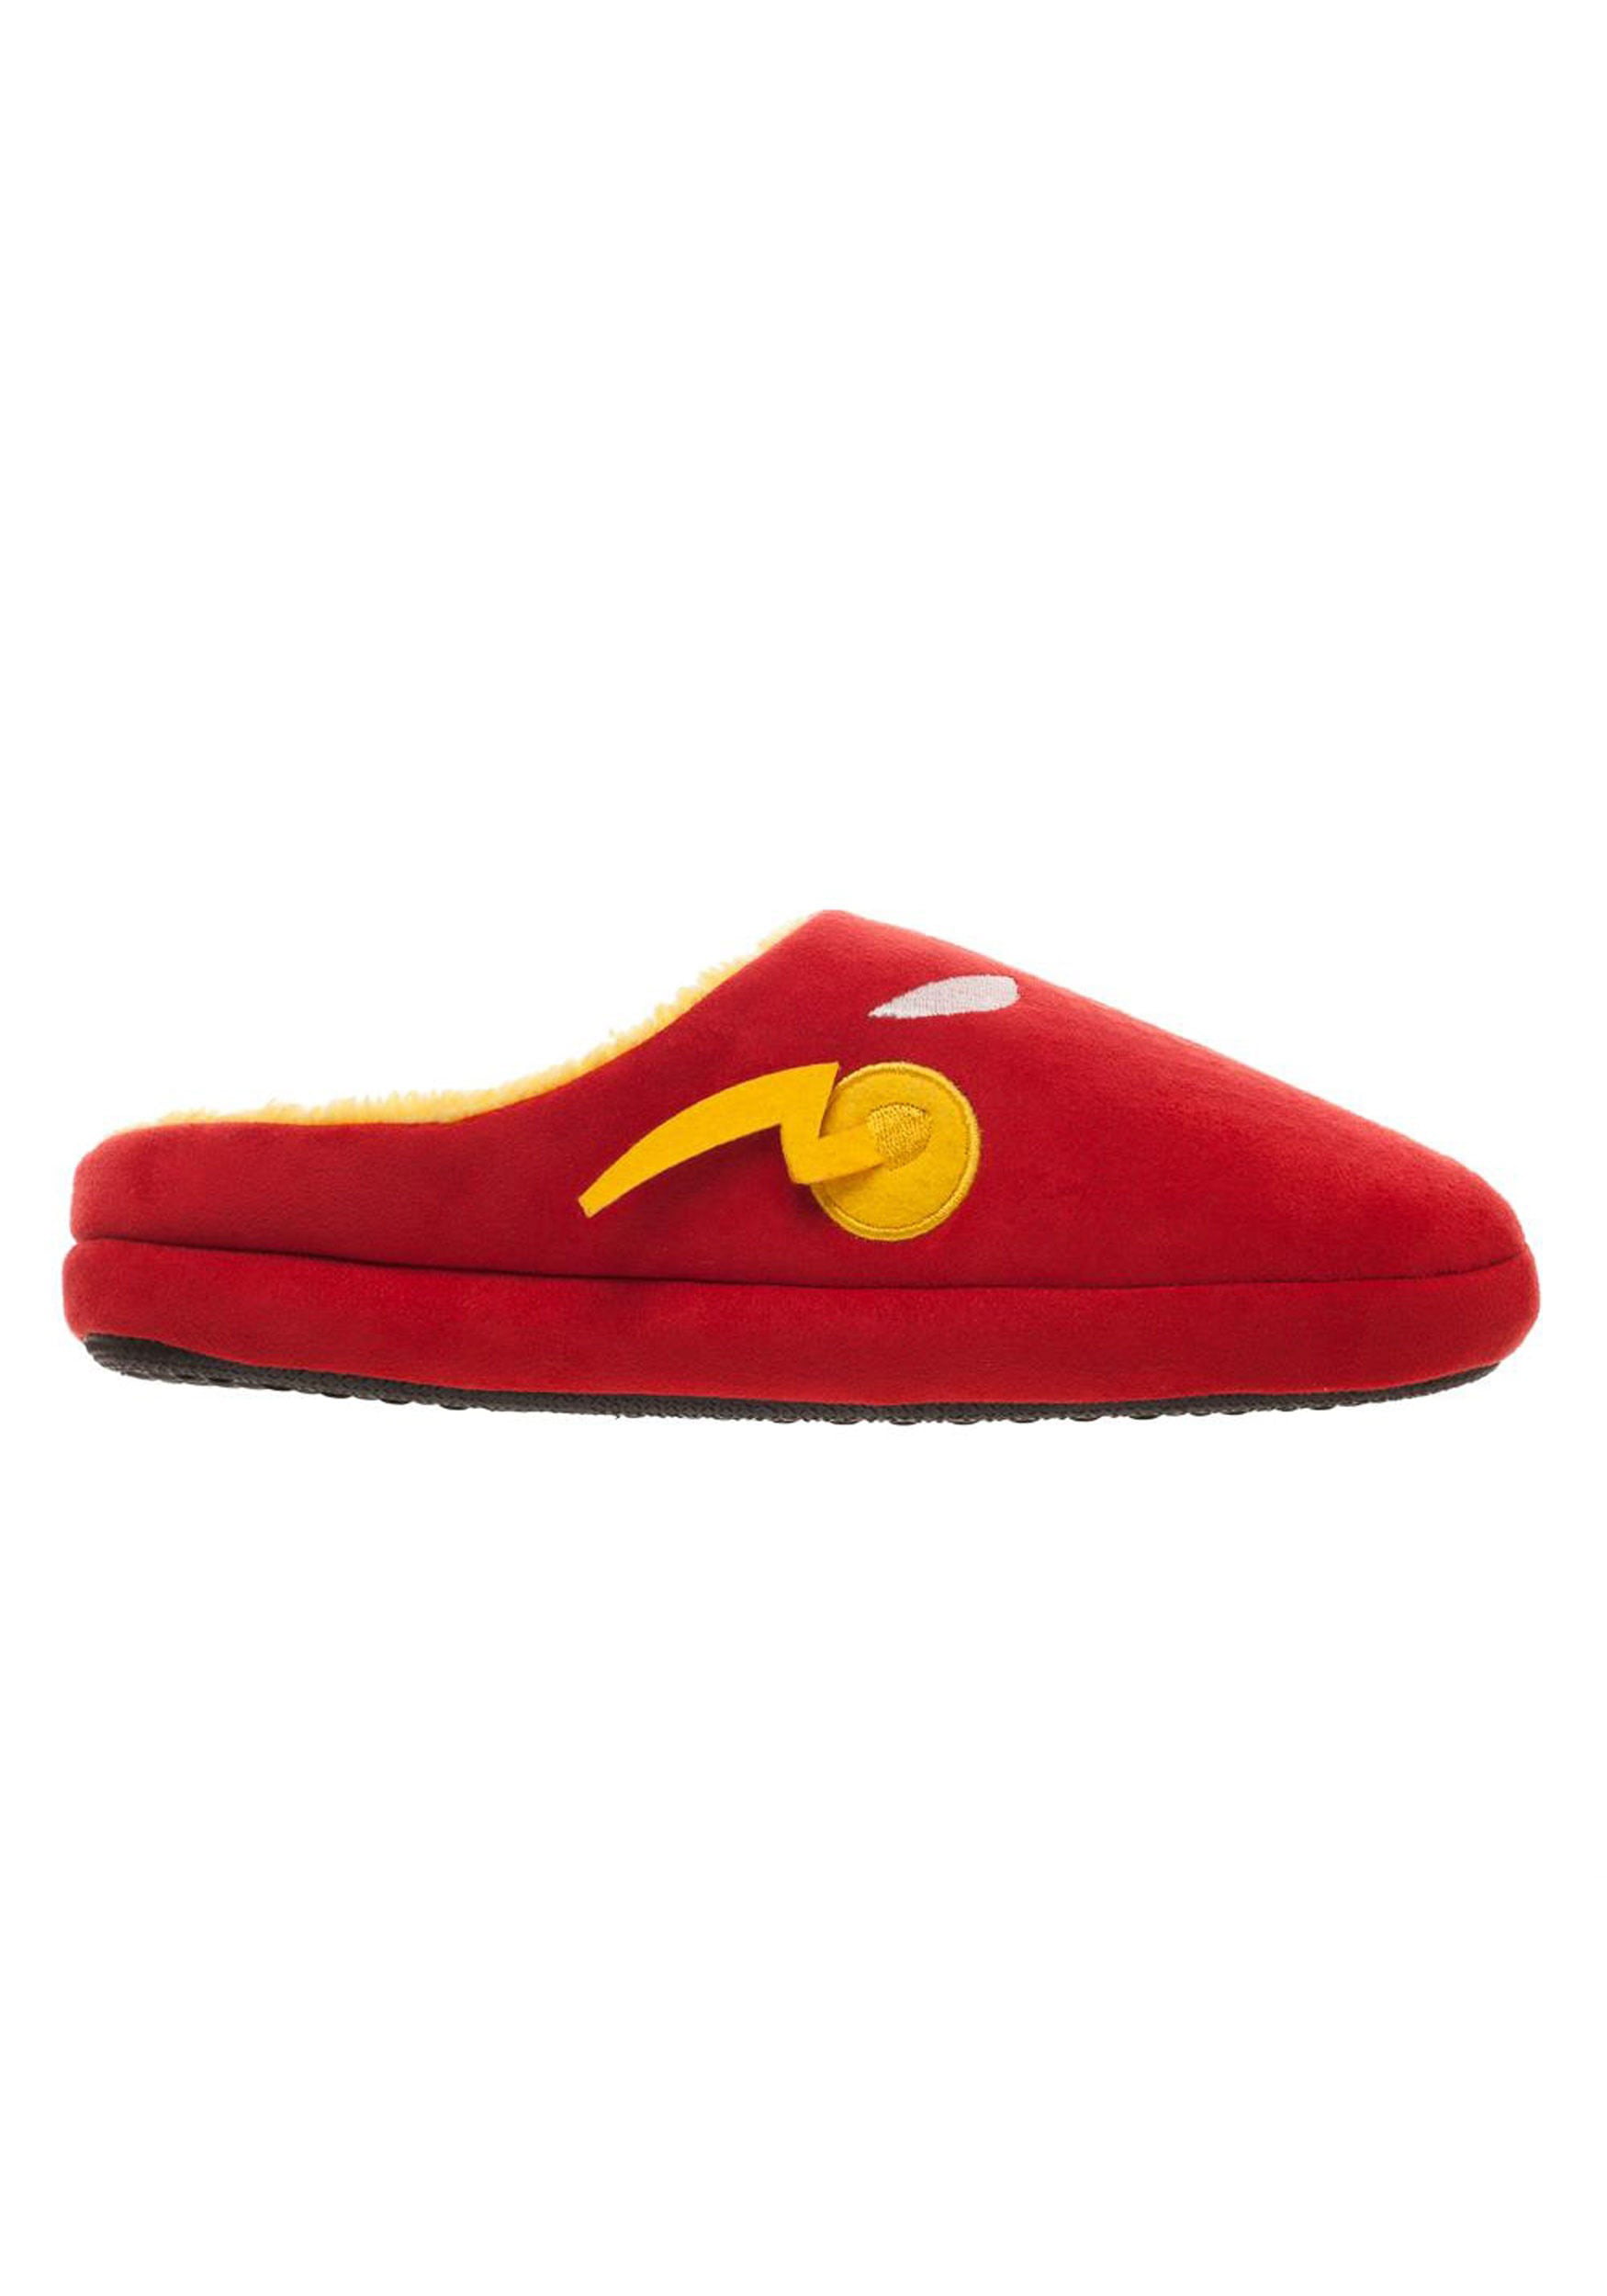 sonic slippers walmart